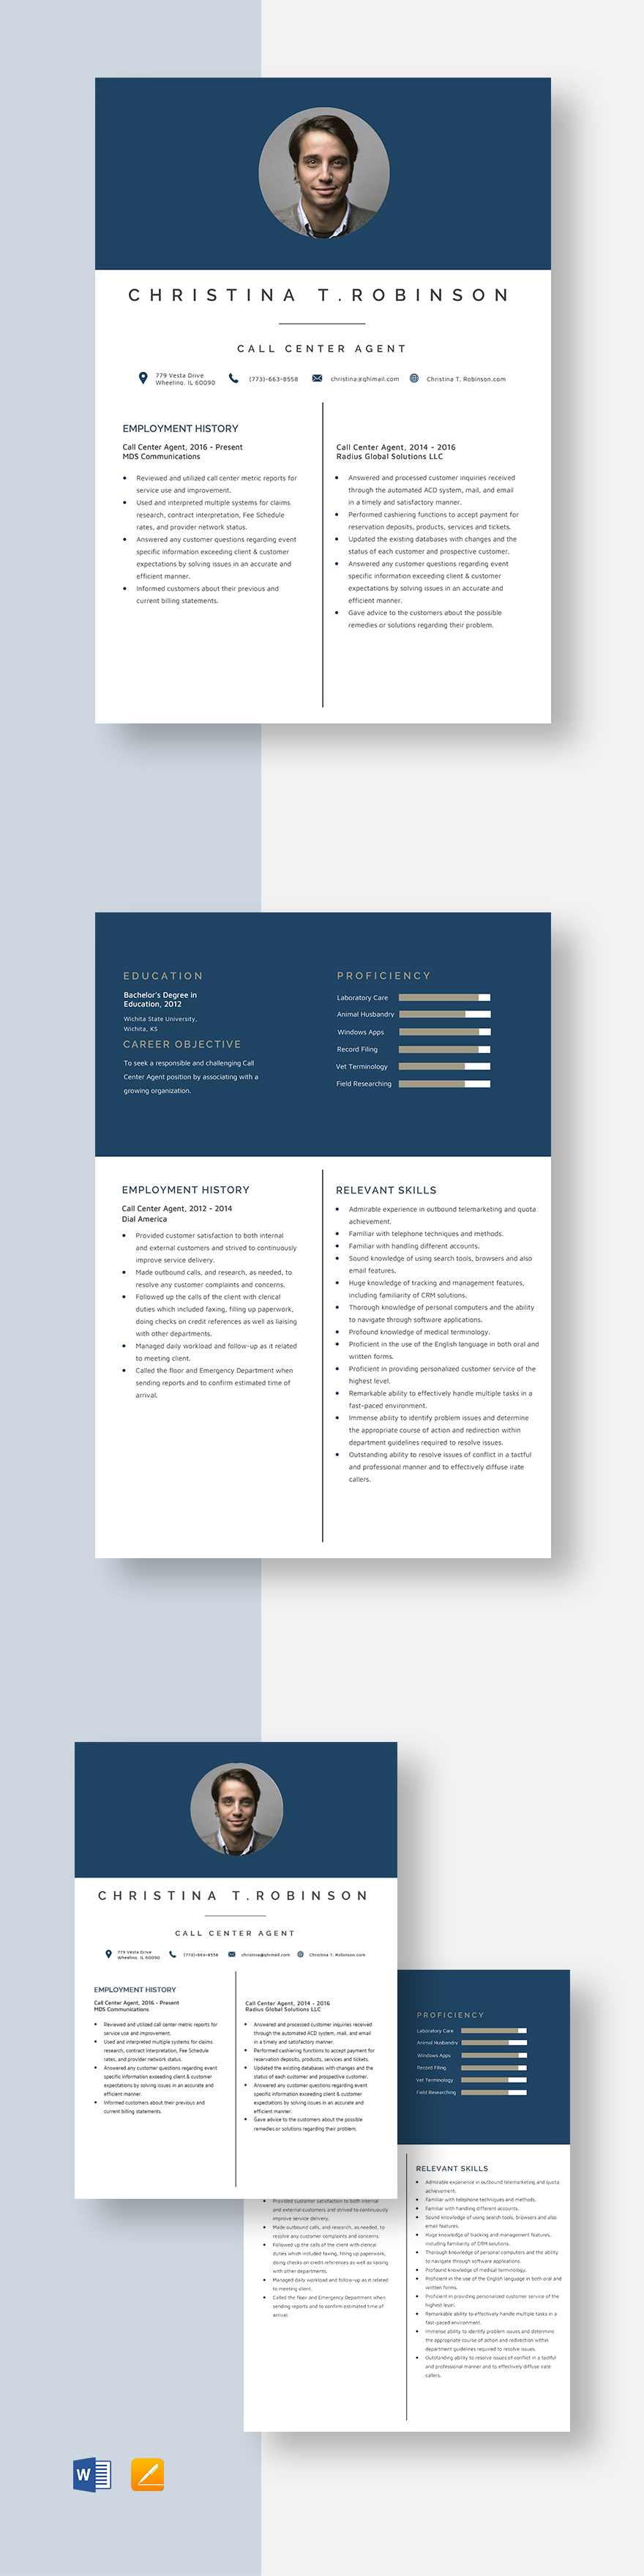 call-center-representative-resume-guide-12-samples-in-pdf-2019